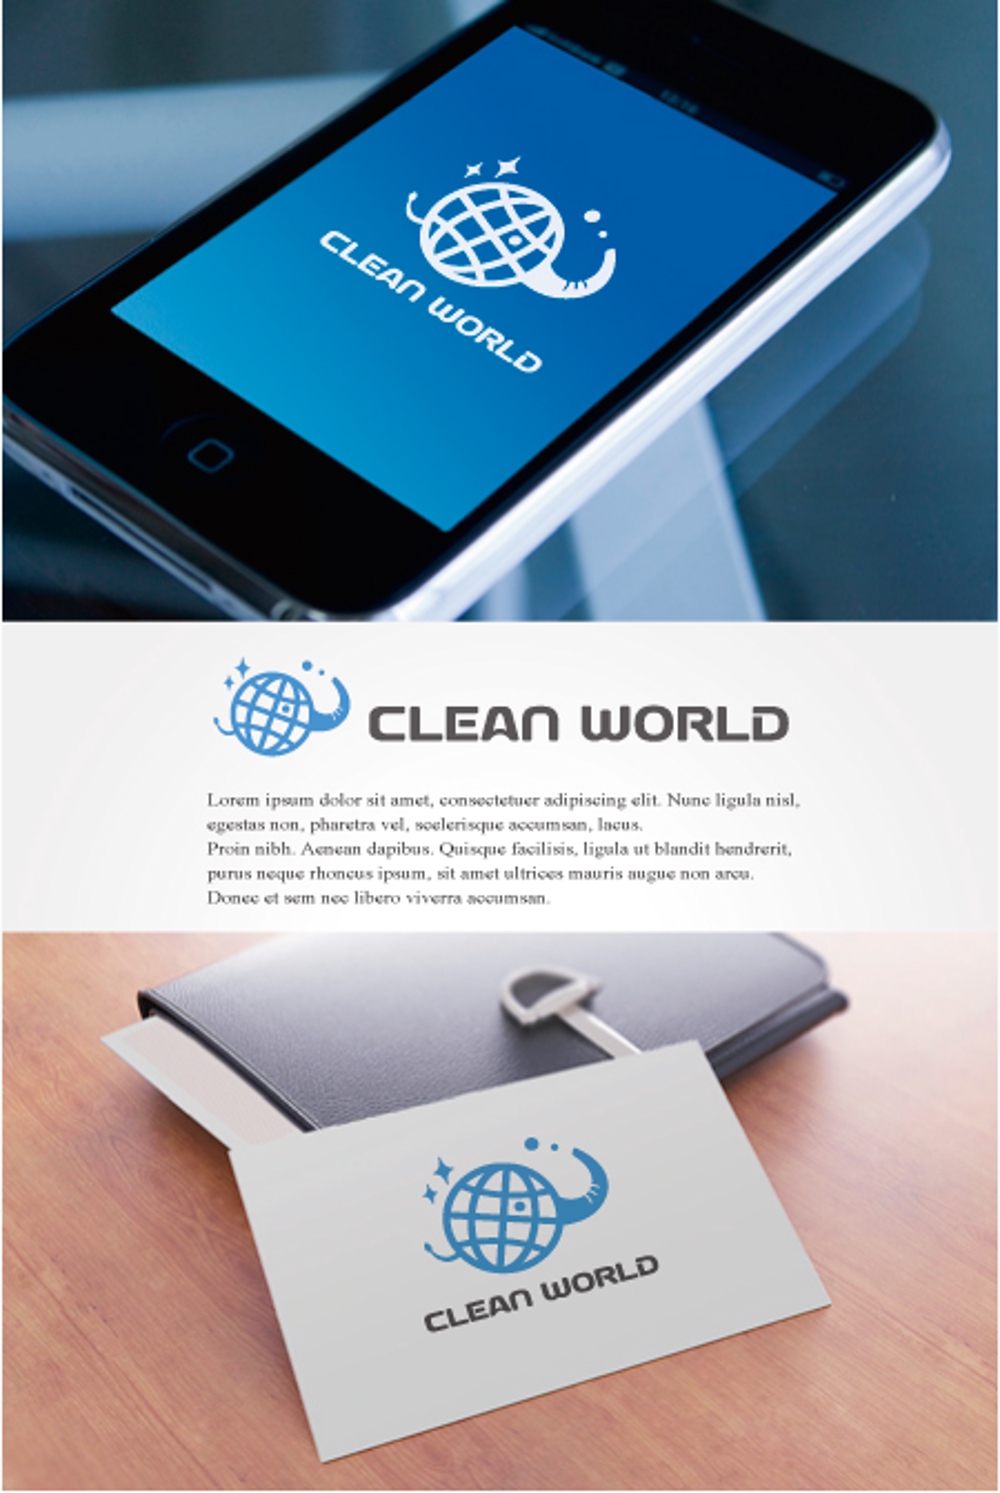 cleanworld1.jpg